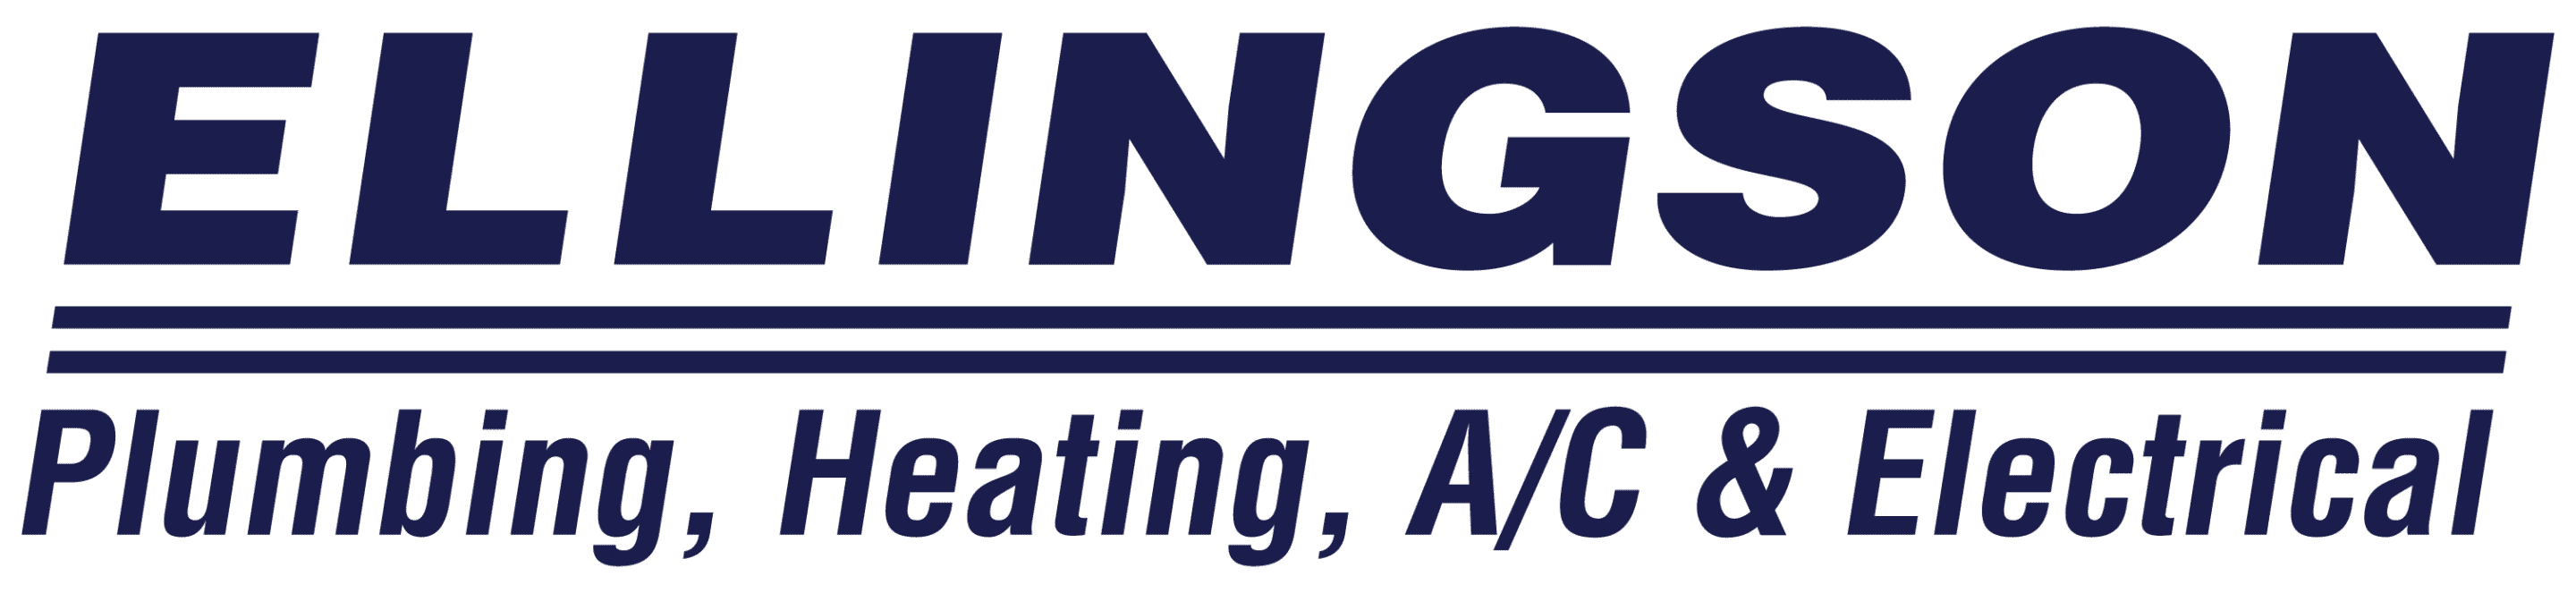 Ellingson Plumbing, Heating, A/C & Electrical Logo